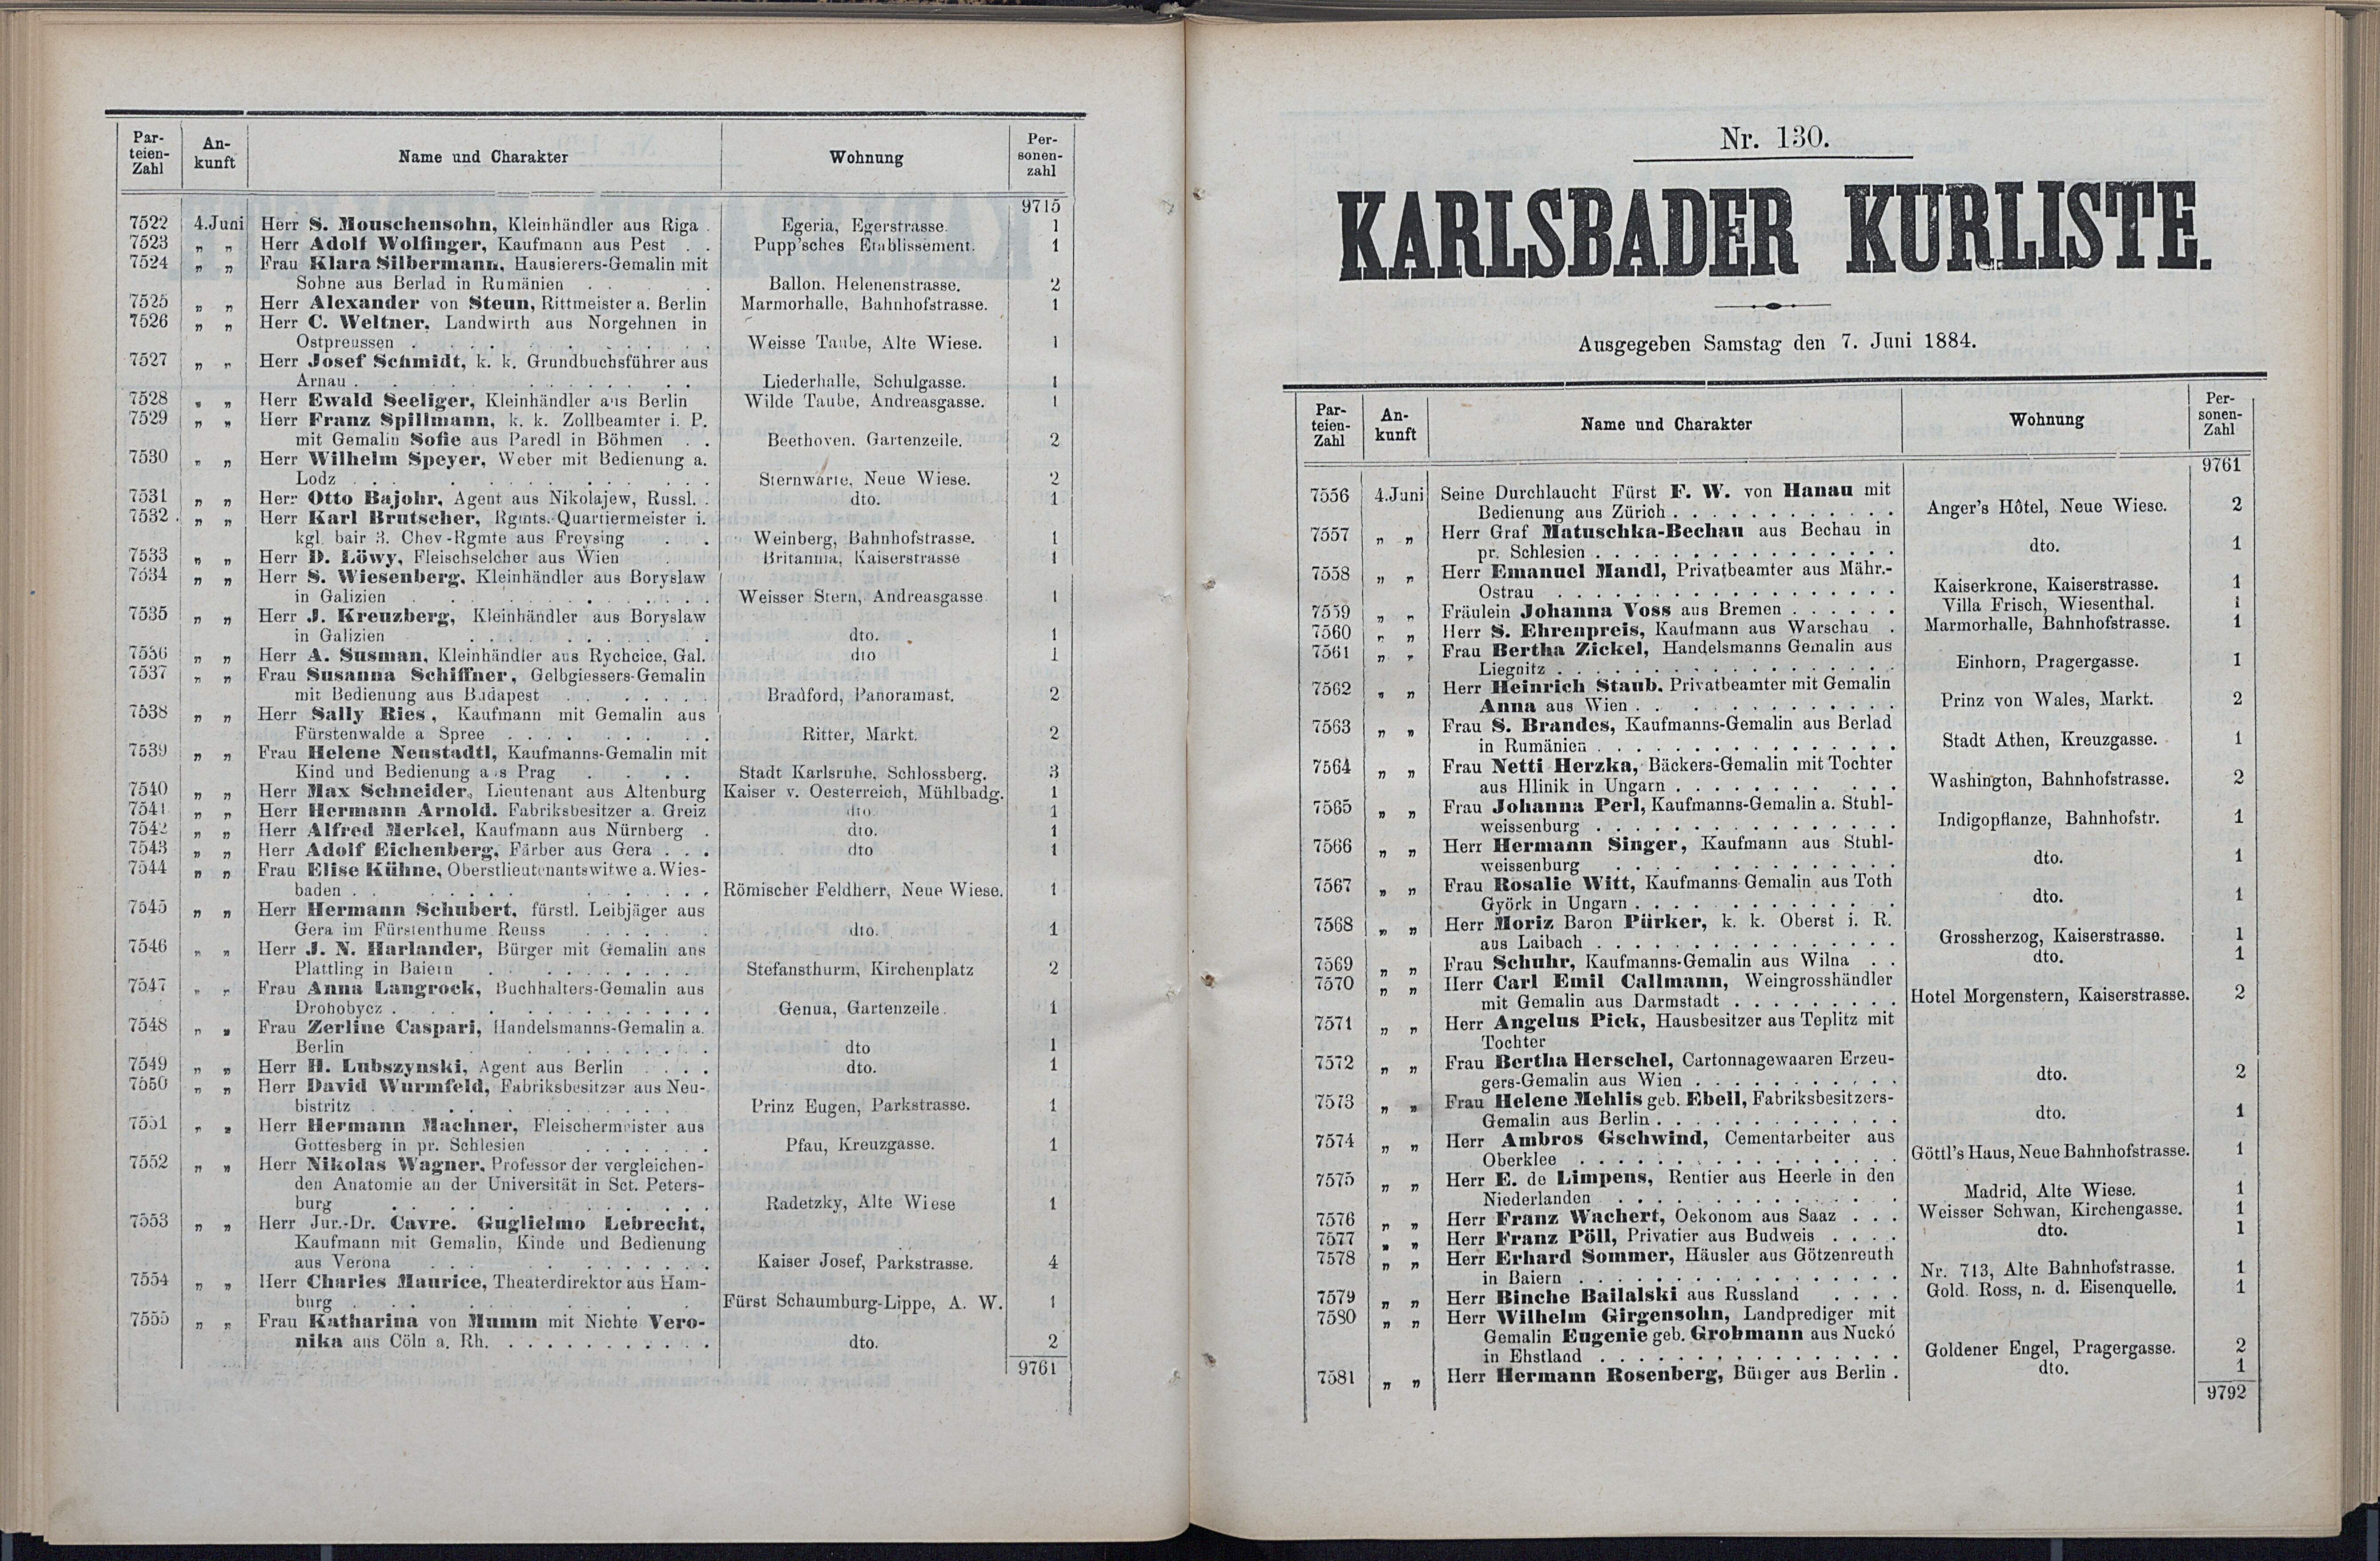 147. soap-kv_knihovna_karlsbader-kurliste-1884_1480